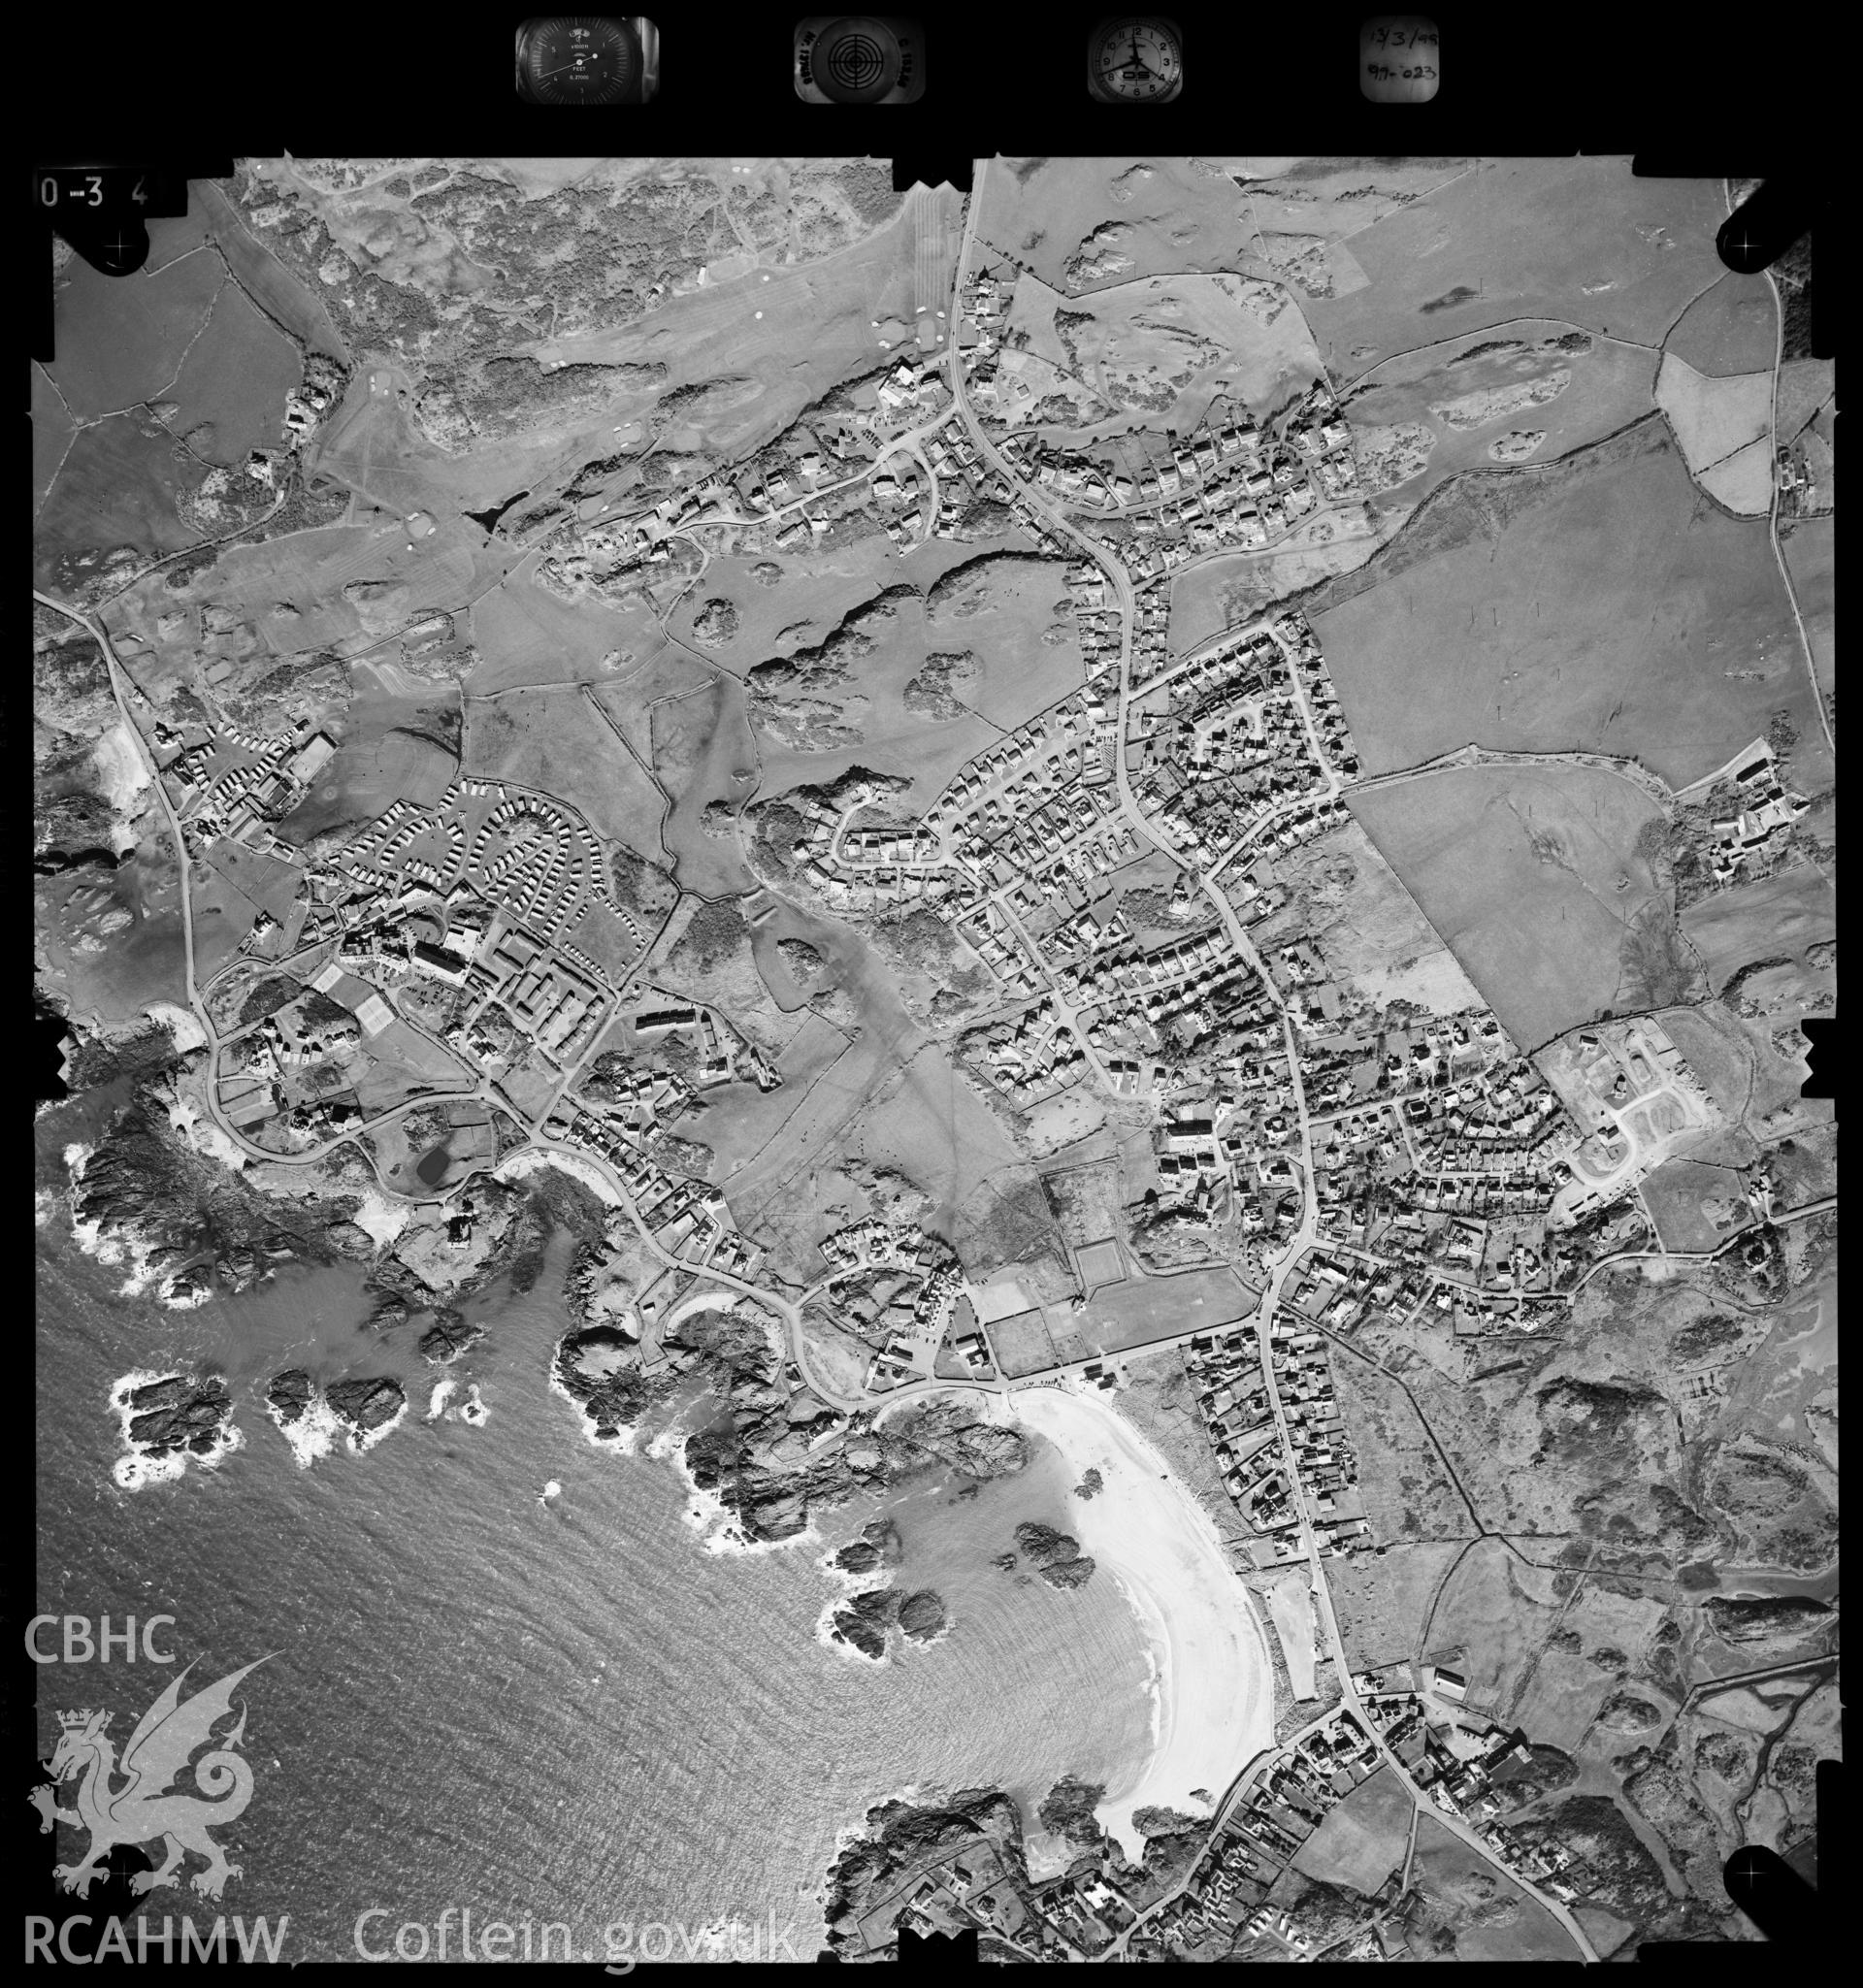 Digitized copy of an aerial photograph showing Trearddur Bay, taken by Ordnance Survey, 1999.